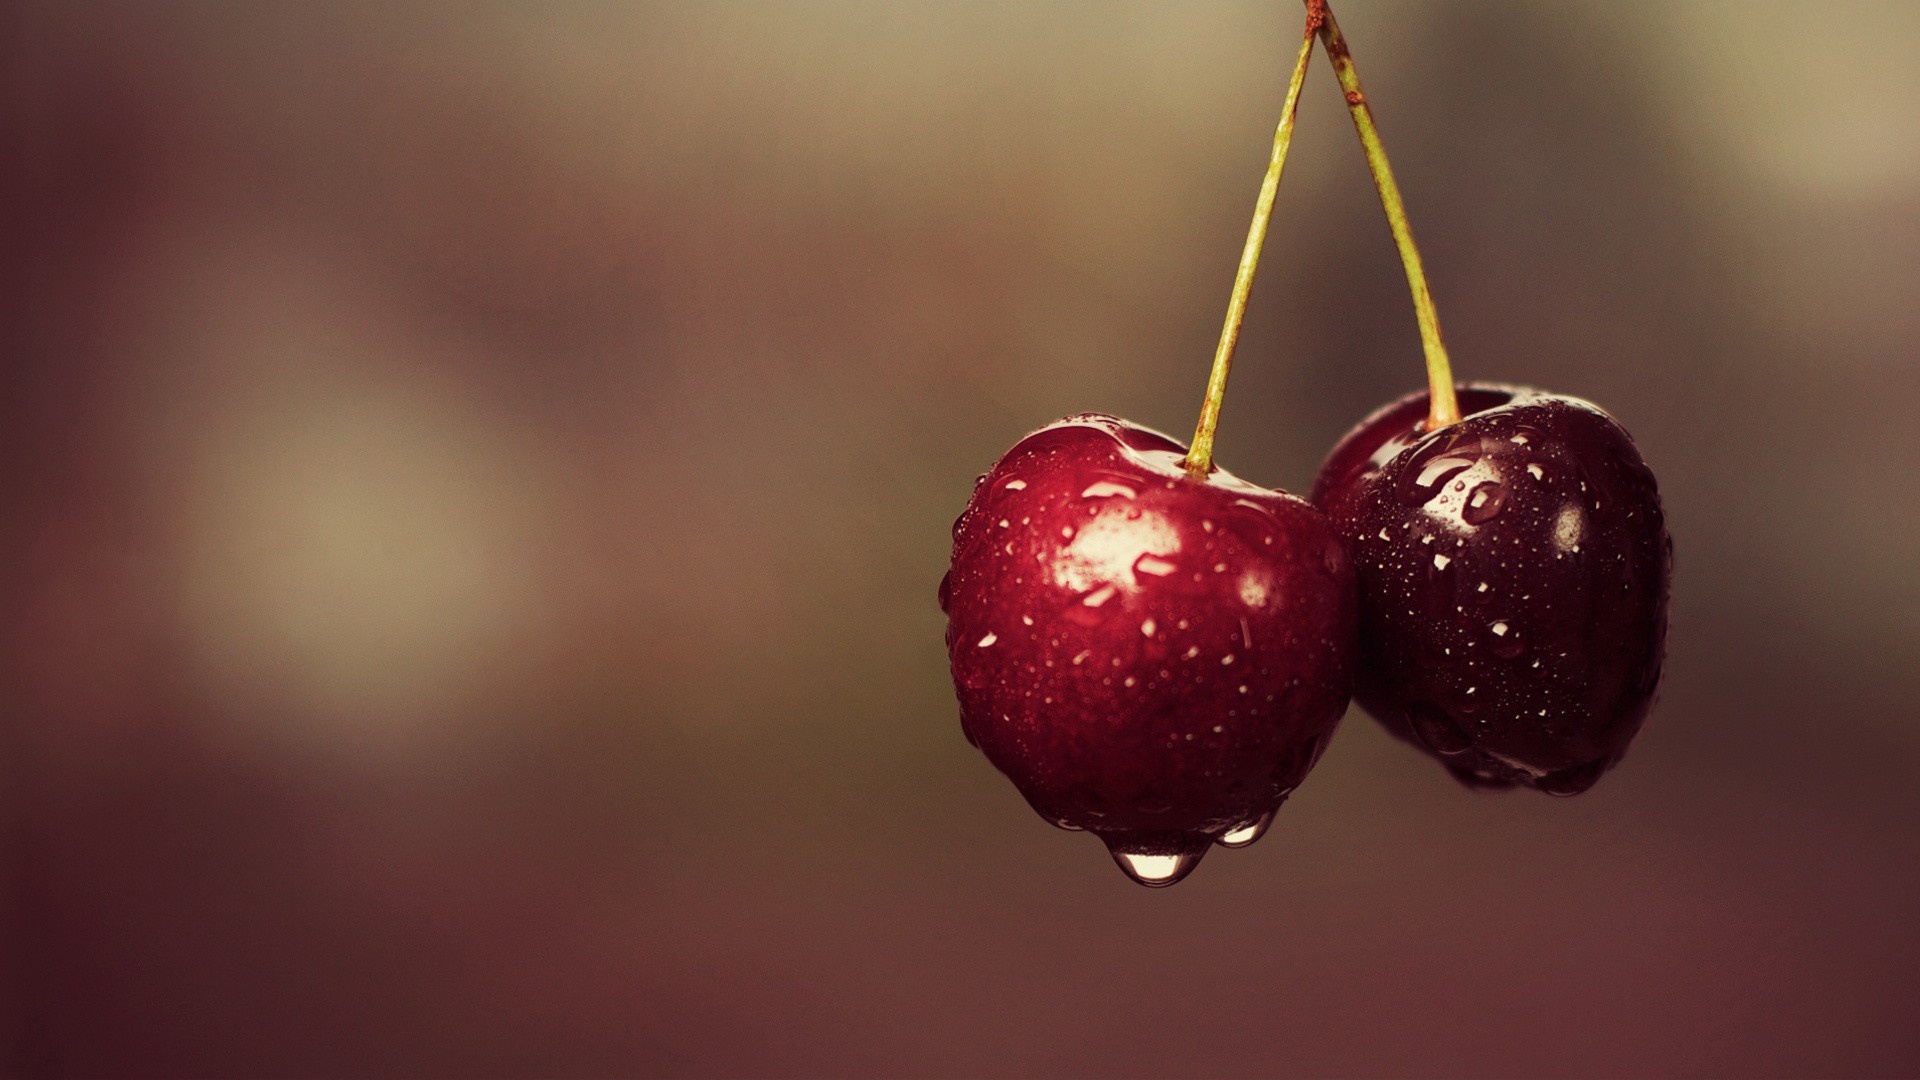 Cherry: Contain high amounts of fiber, vitamin C, and potassium. 1920x1080 Full HD Wallpaper.